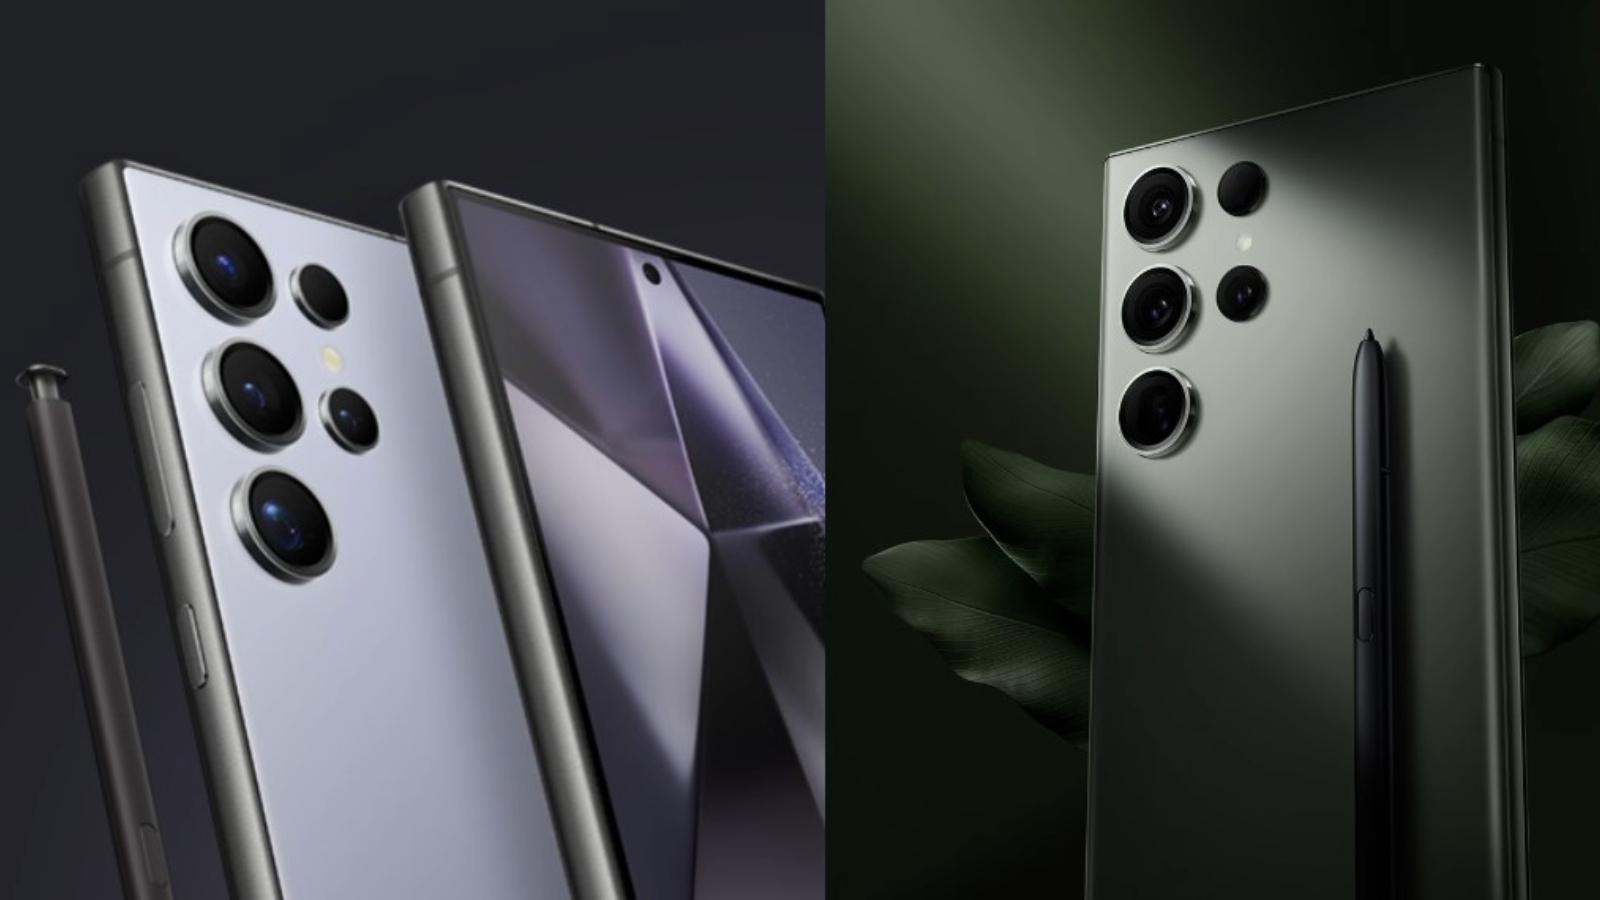 From battery to titanium design, Galaxy S24 Ultra leak reveals key specs